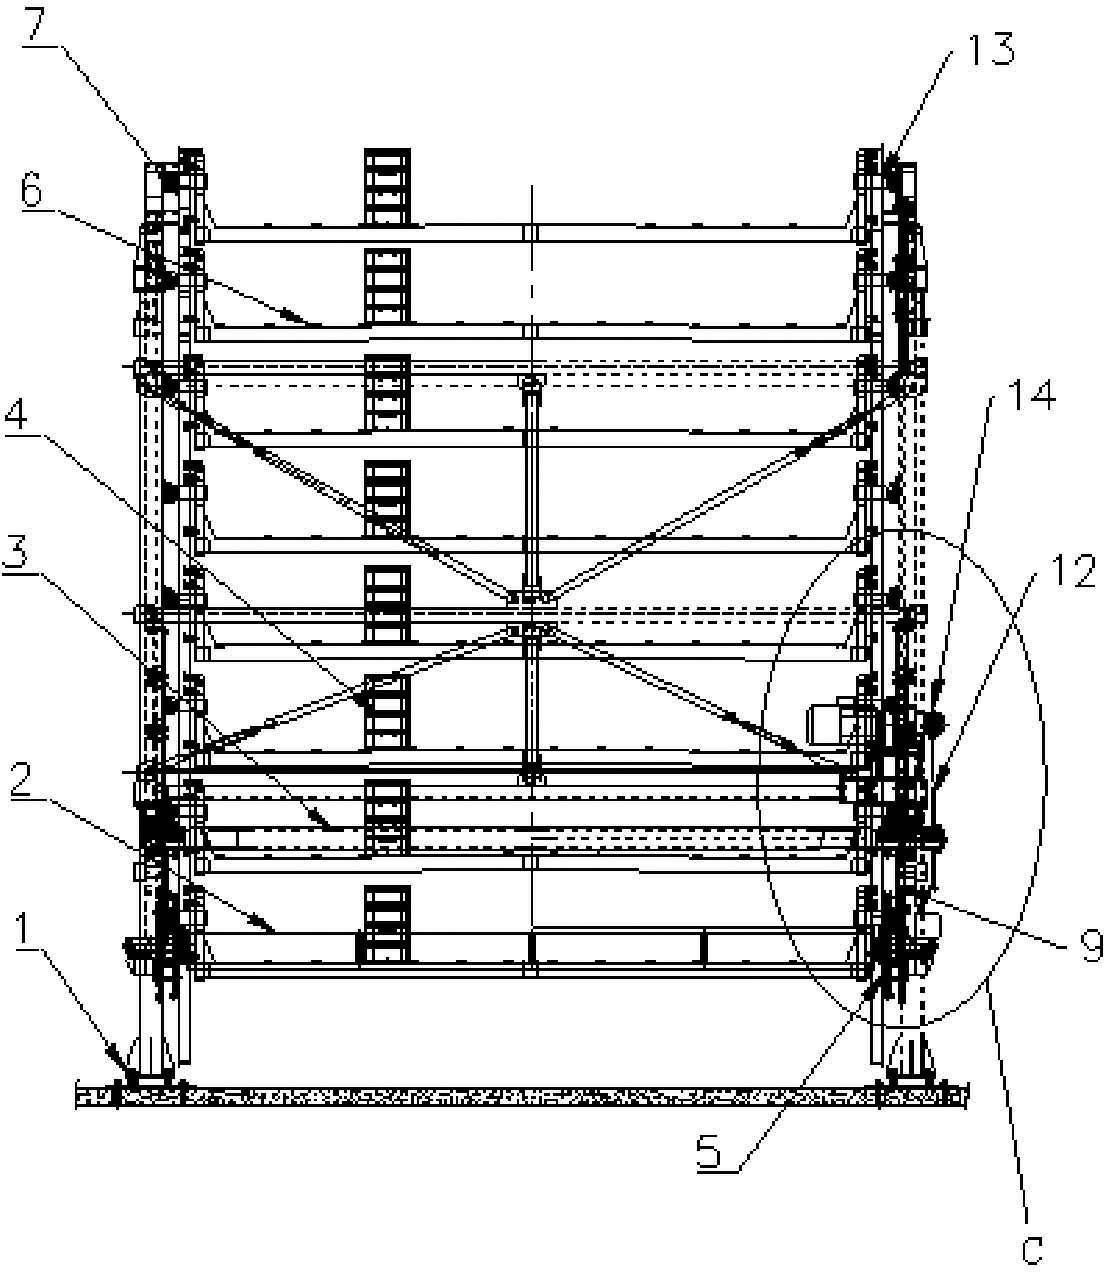 Stereoscopic perpendicular circulating warehouse